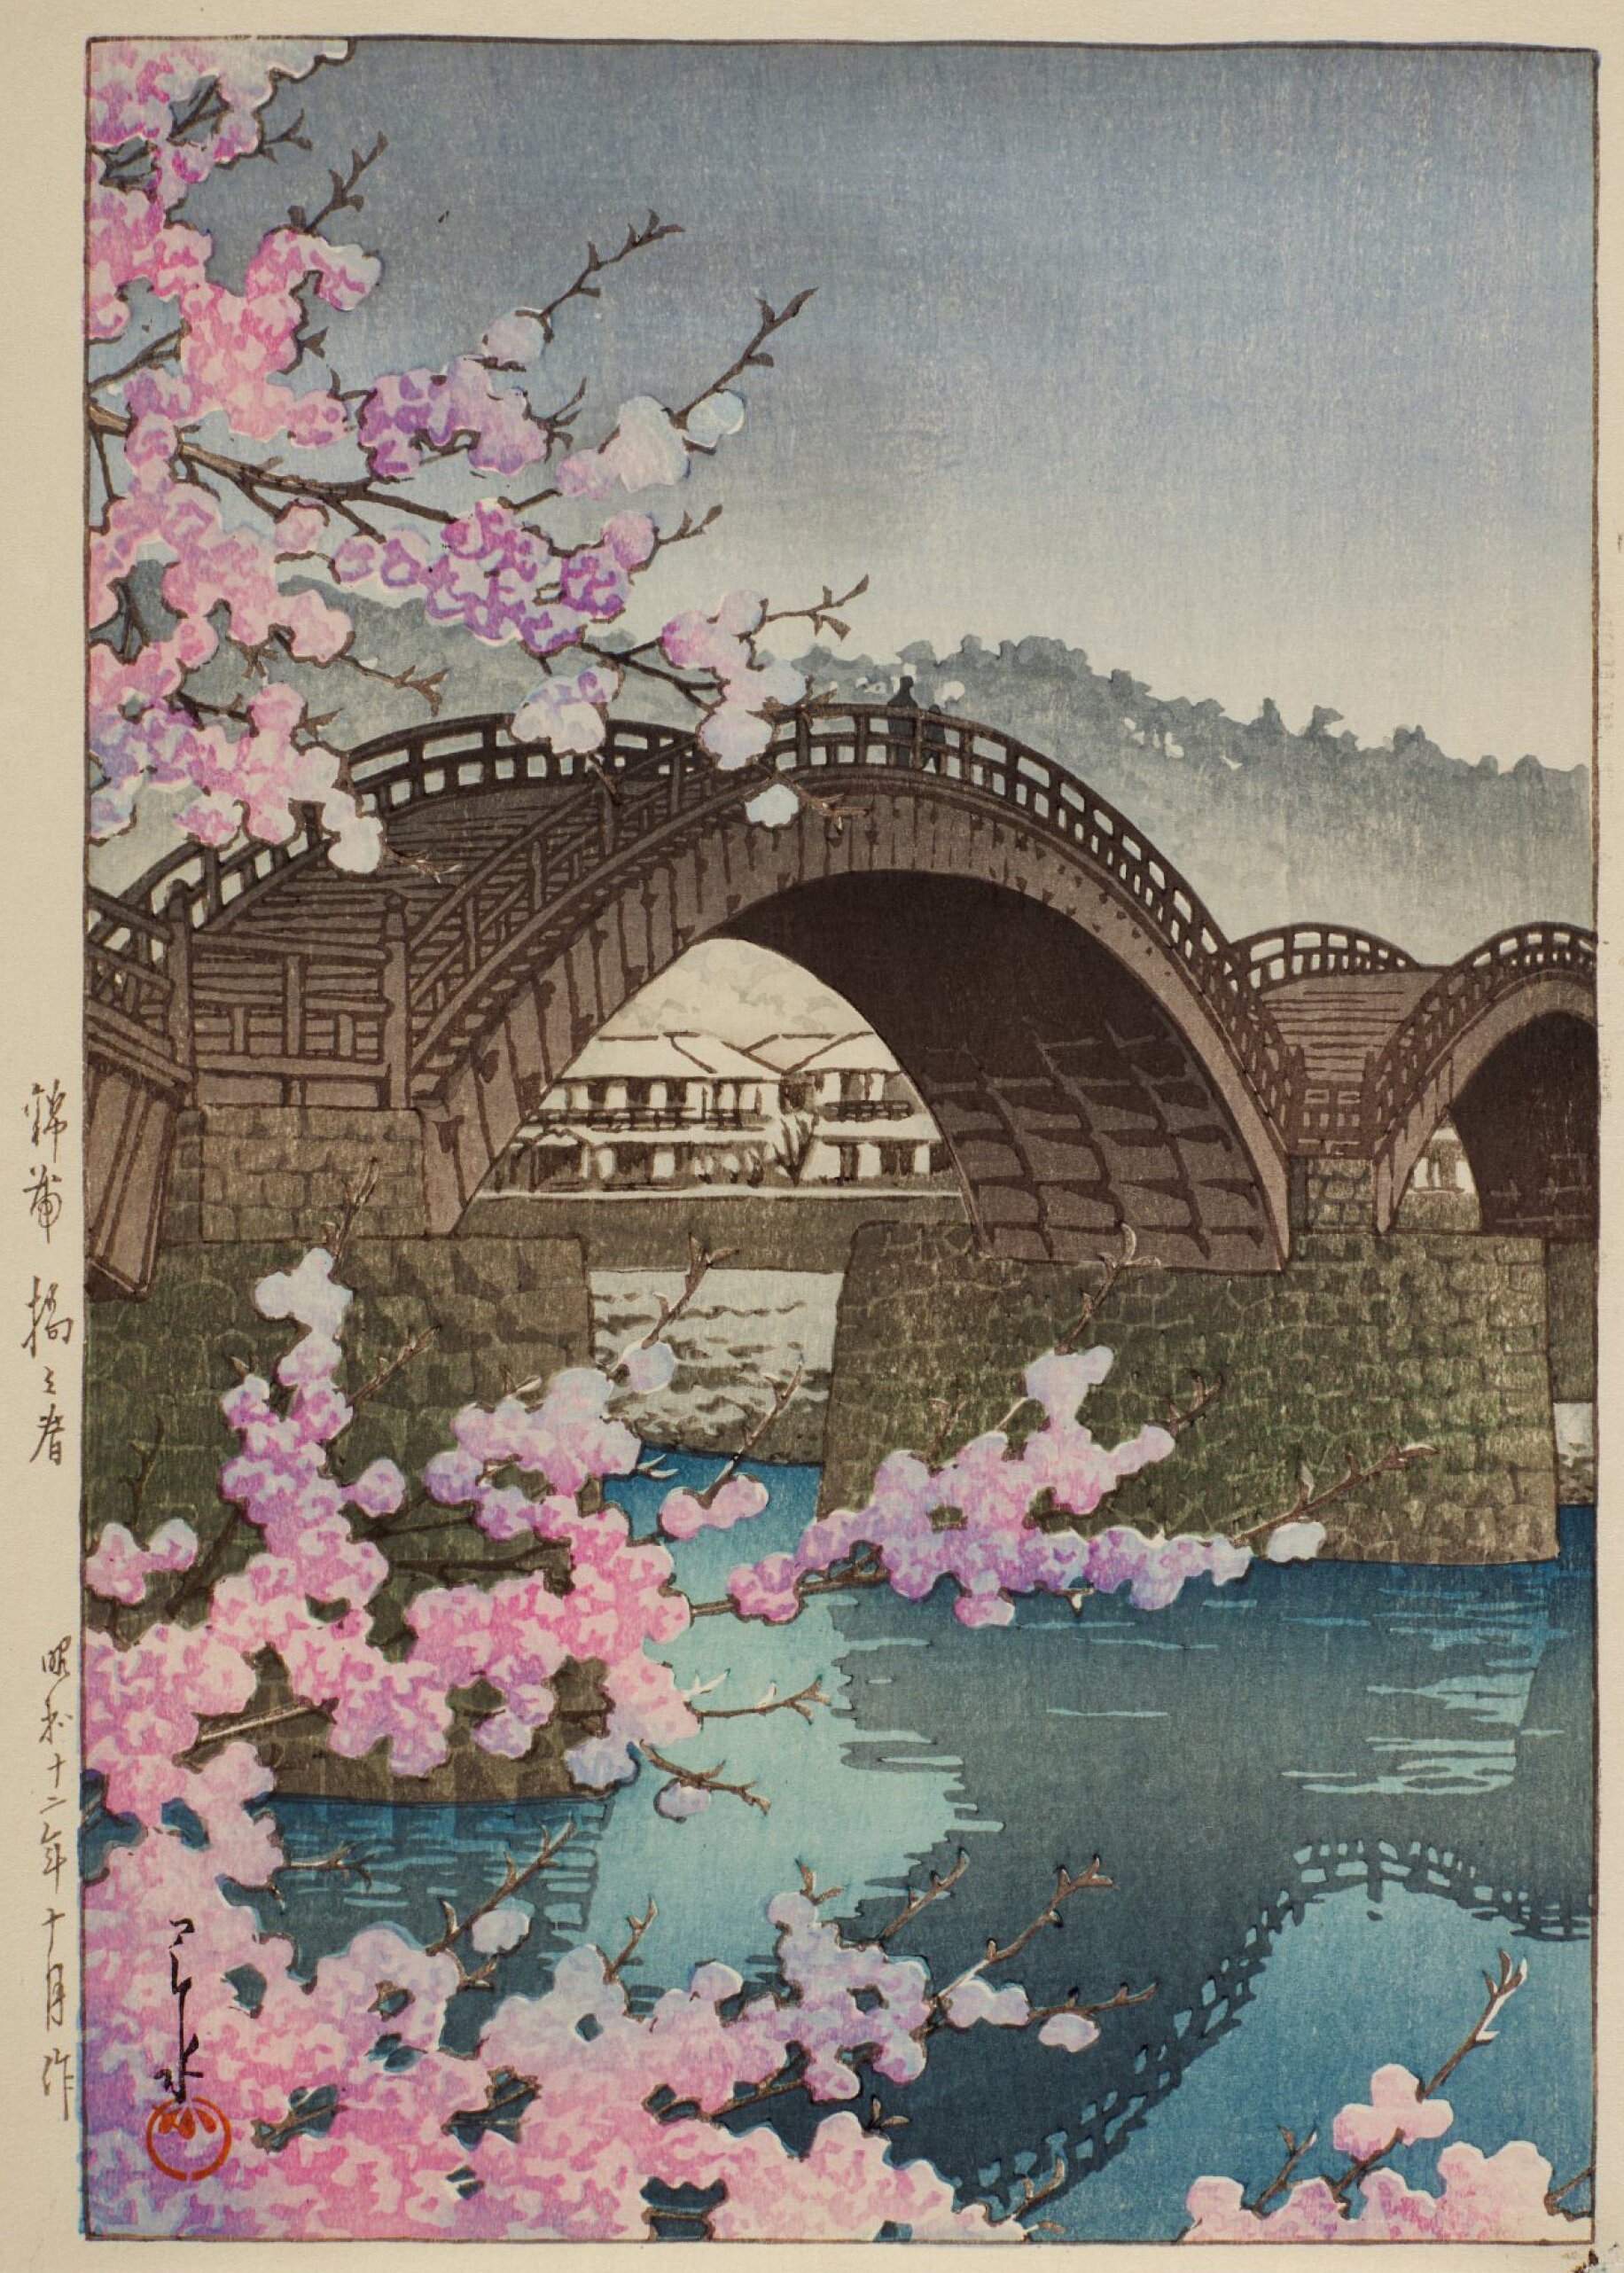 Kintai Bridge in Spring - Kawase Hasui Catalogue woodblock print